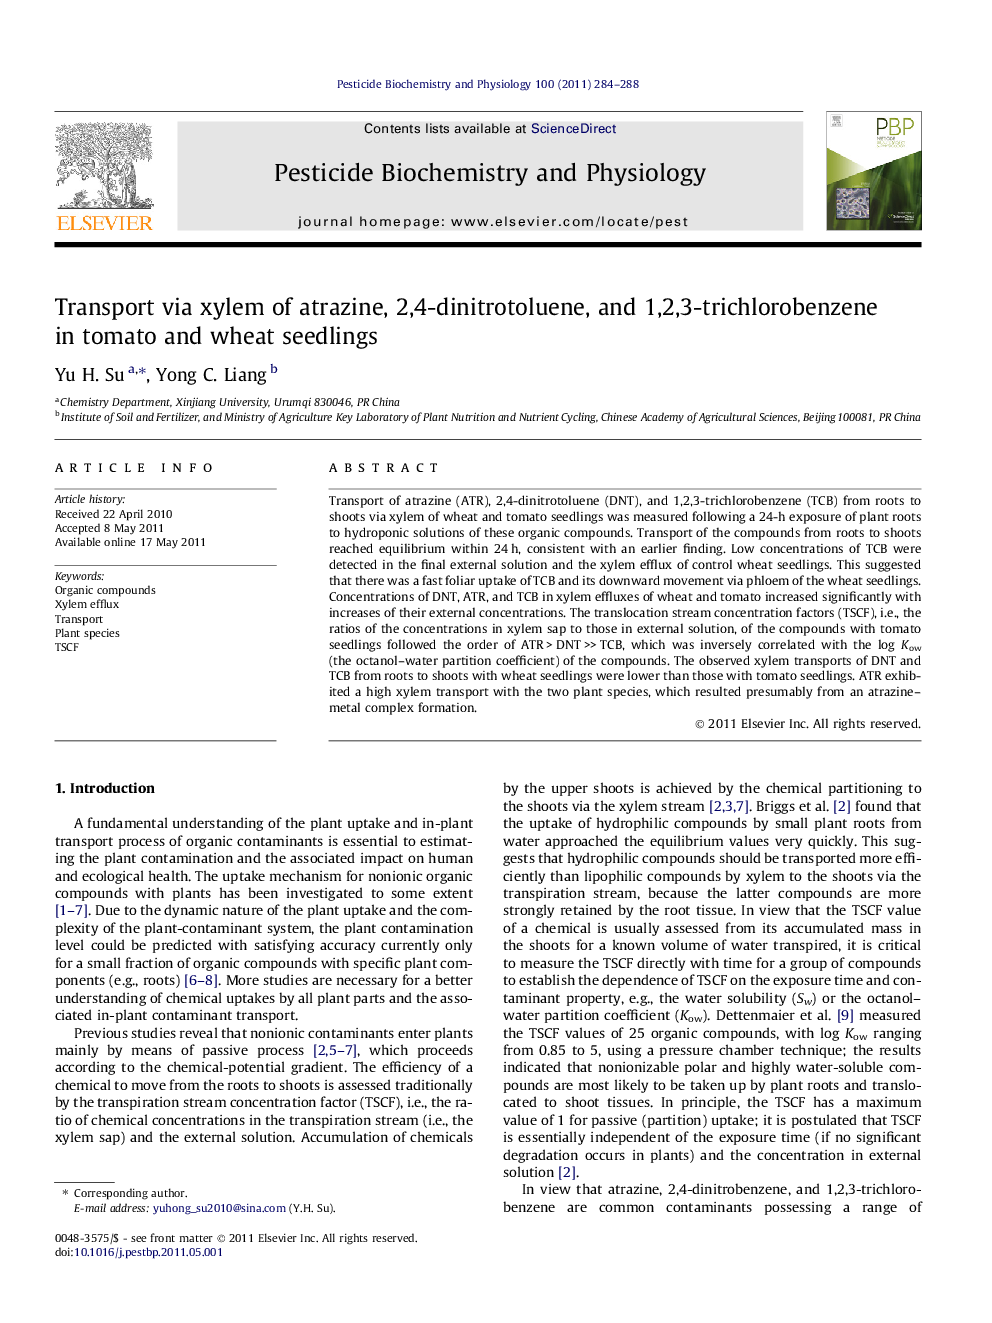 Transport via xylem of atrazine, 2,4-dinitrotoluene, and 1,2,3-trichlorobenzene in tomato and wheat seedlings